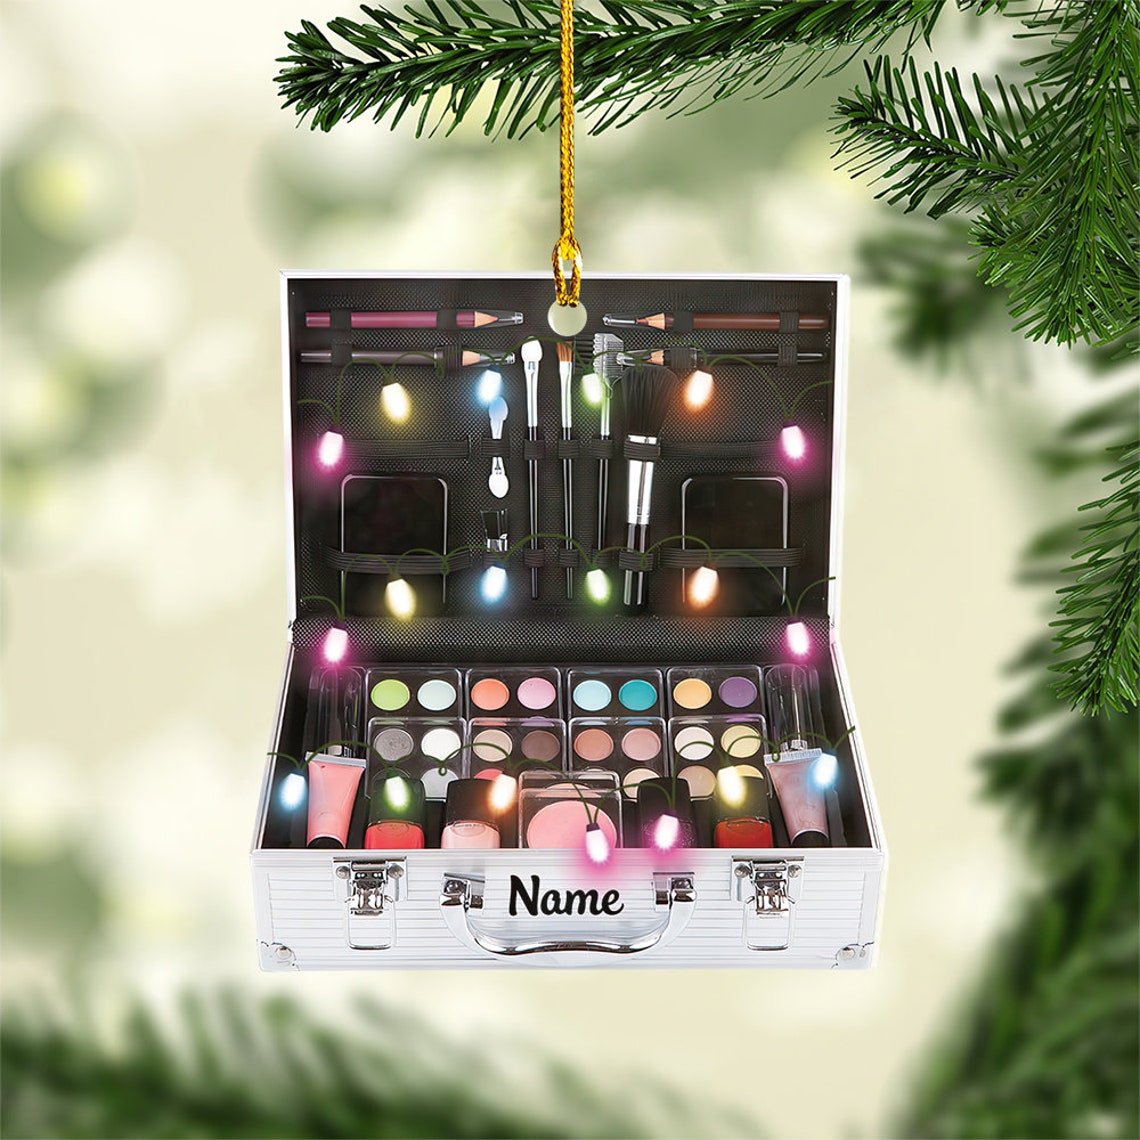 Makeup Case Christmas Ornament/ Xmas Tree Decor/ Loved Makeup Case Ornament/ Christmas Hanging Ornament Gift